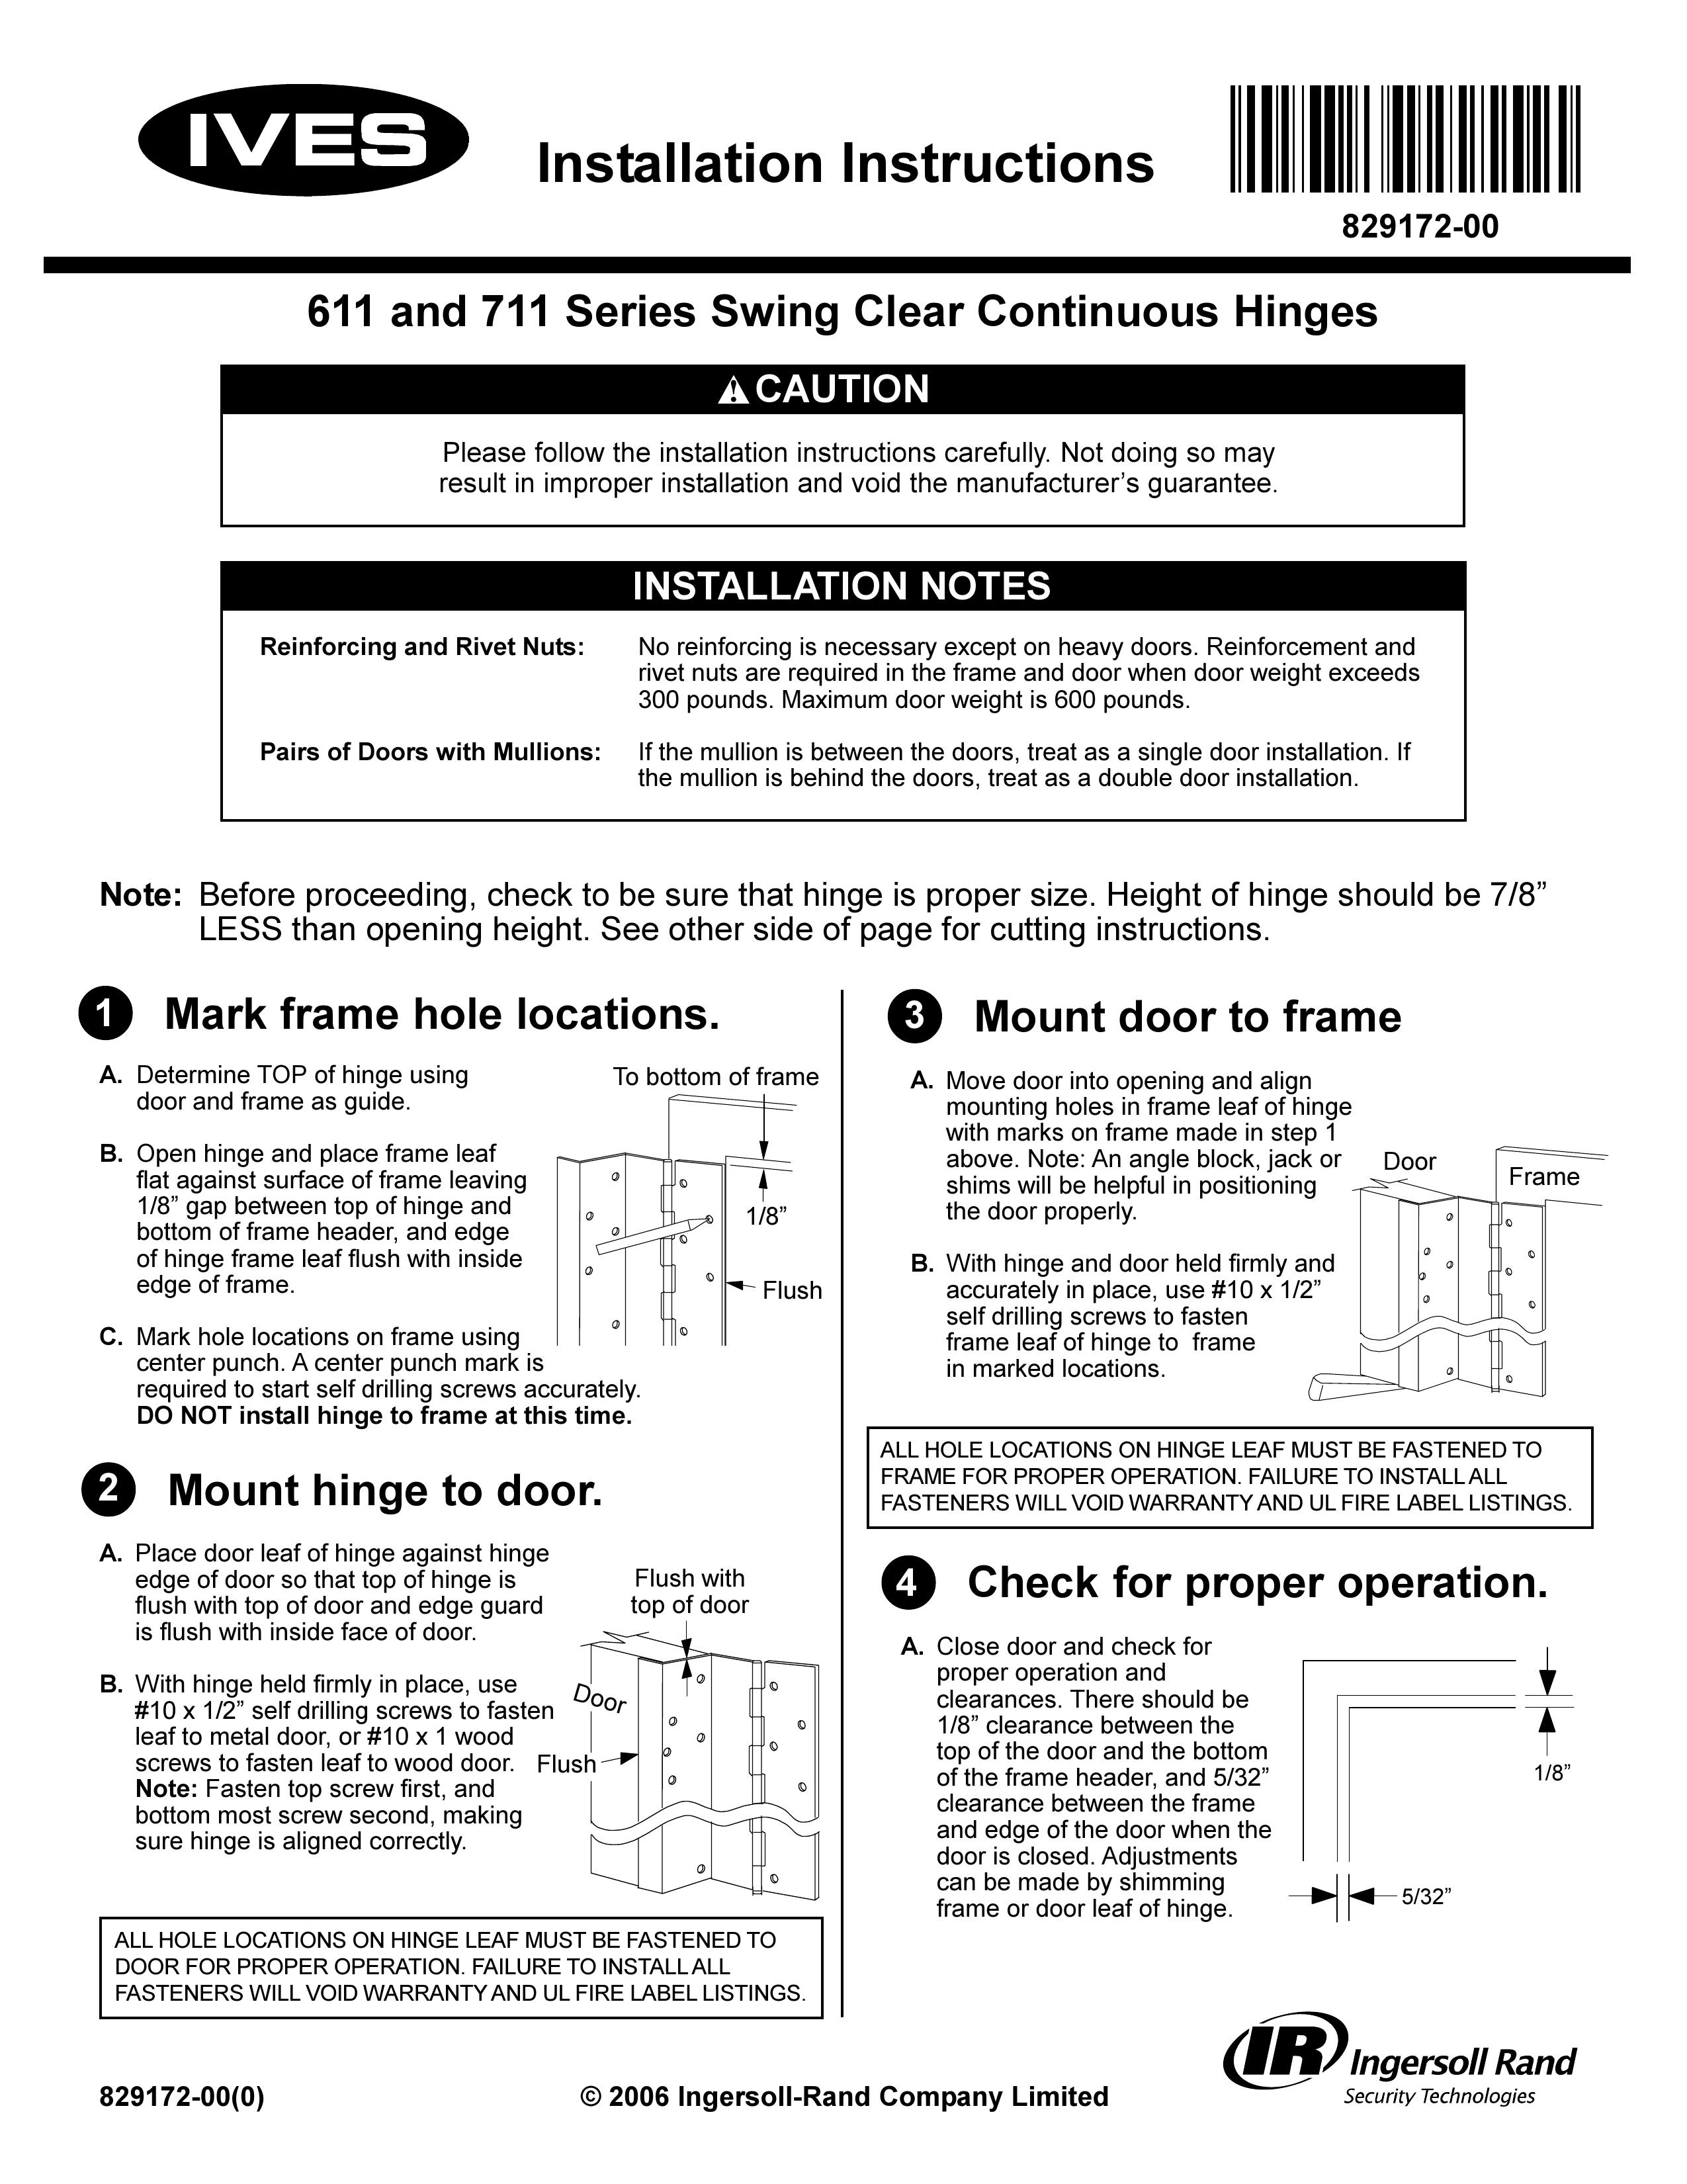 Ives 611 Series Swing Sets User Manual